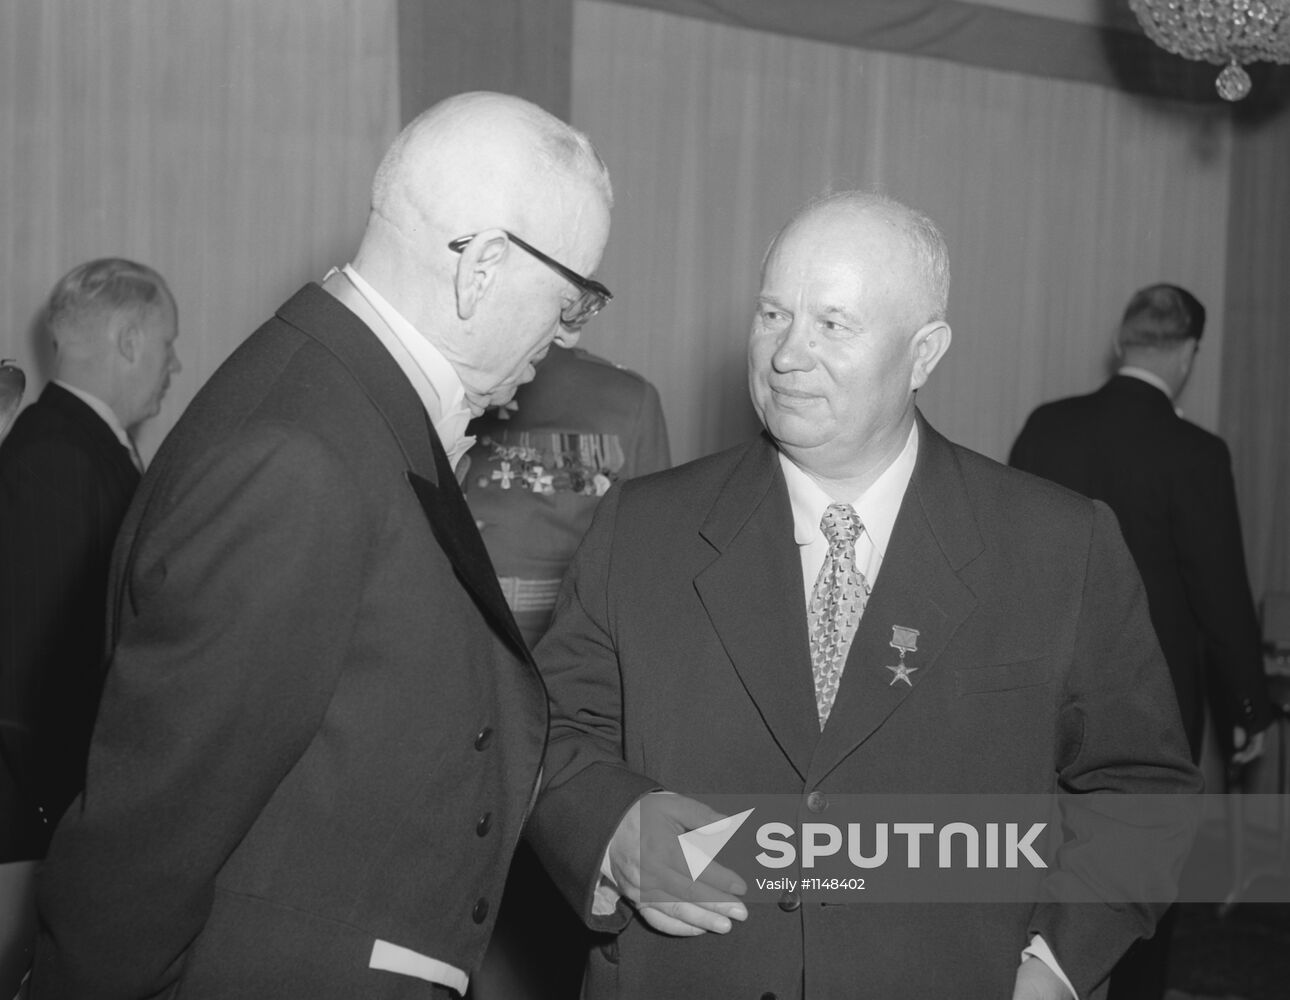 Juho Kusti Paasikivi and Nikita Khruschev